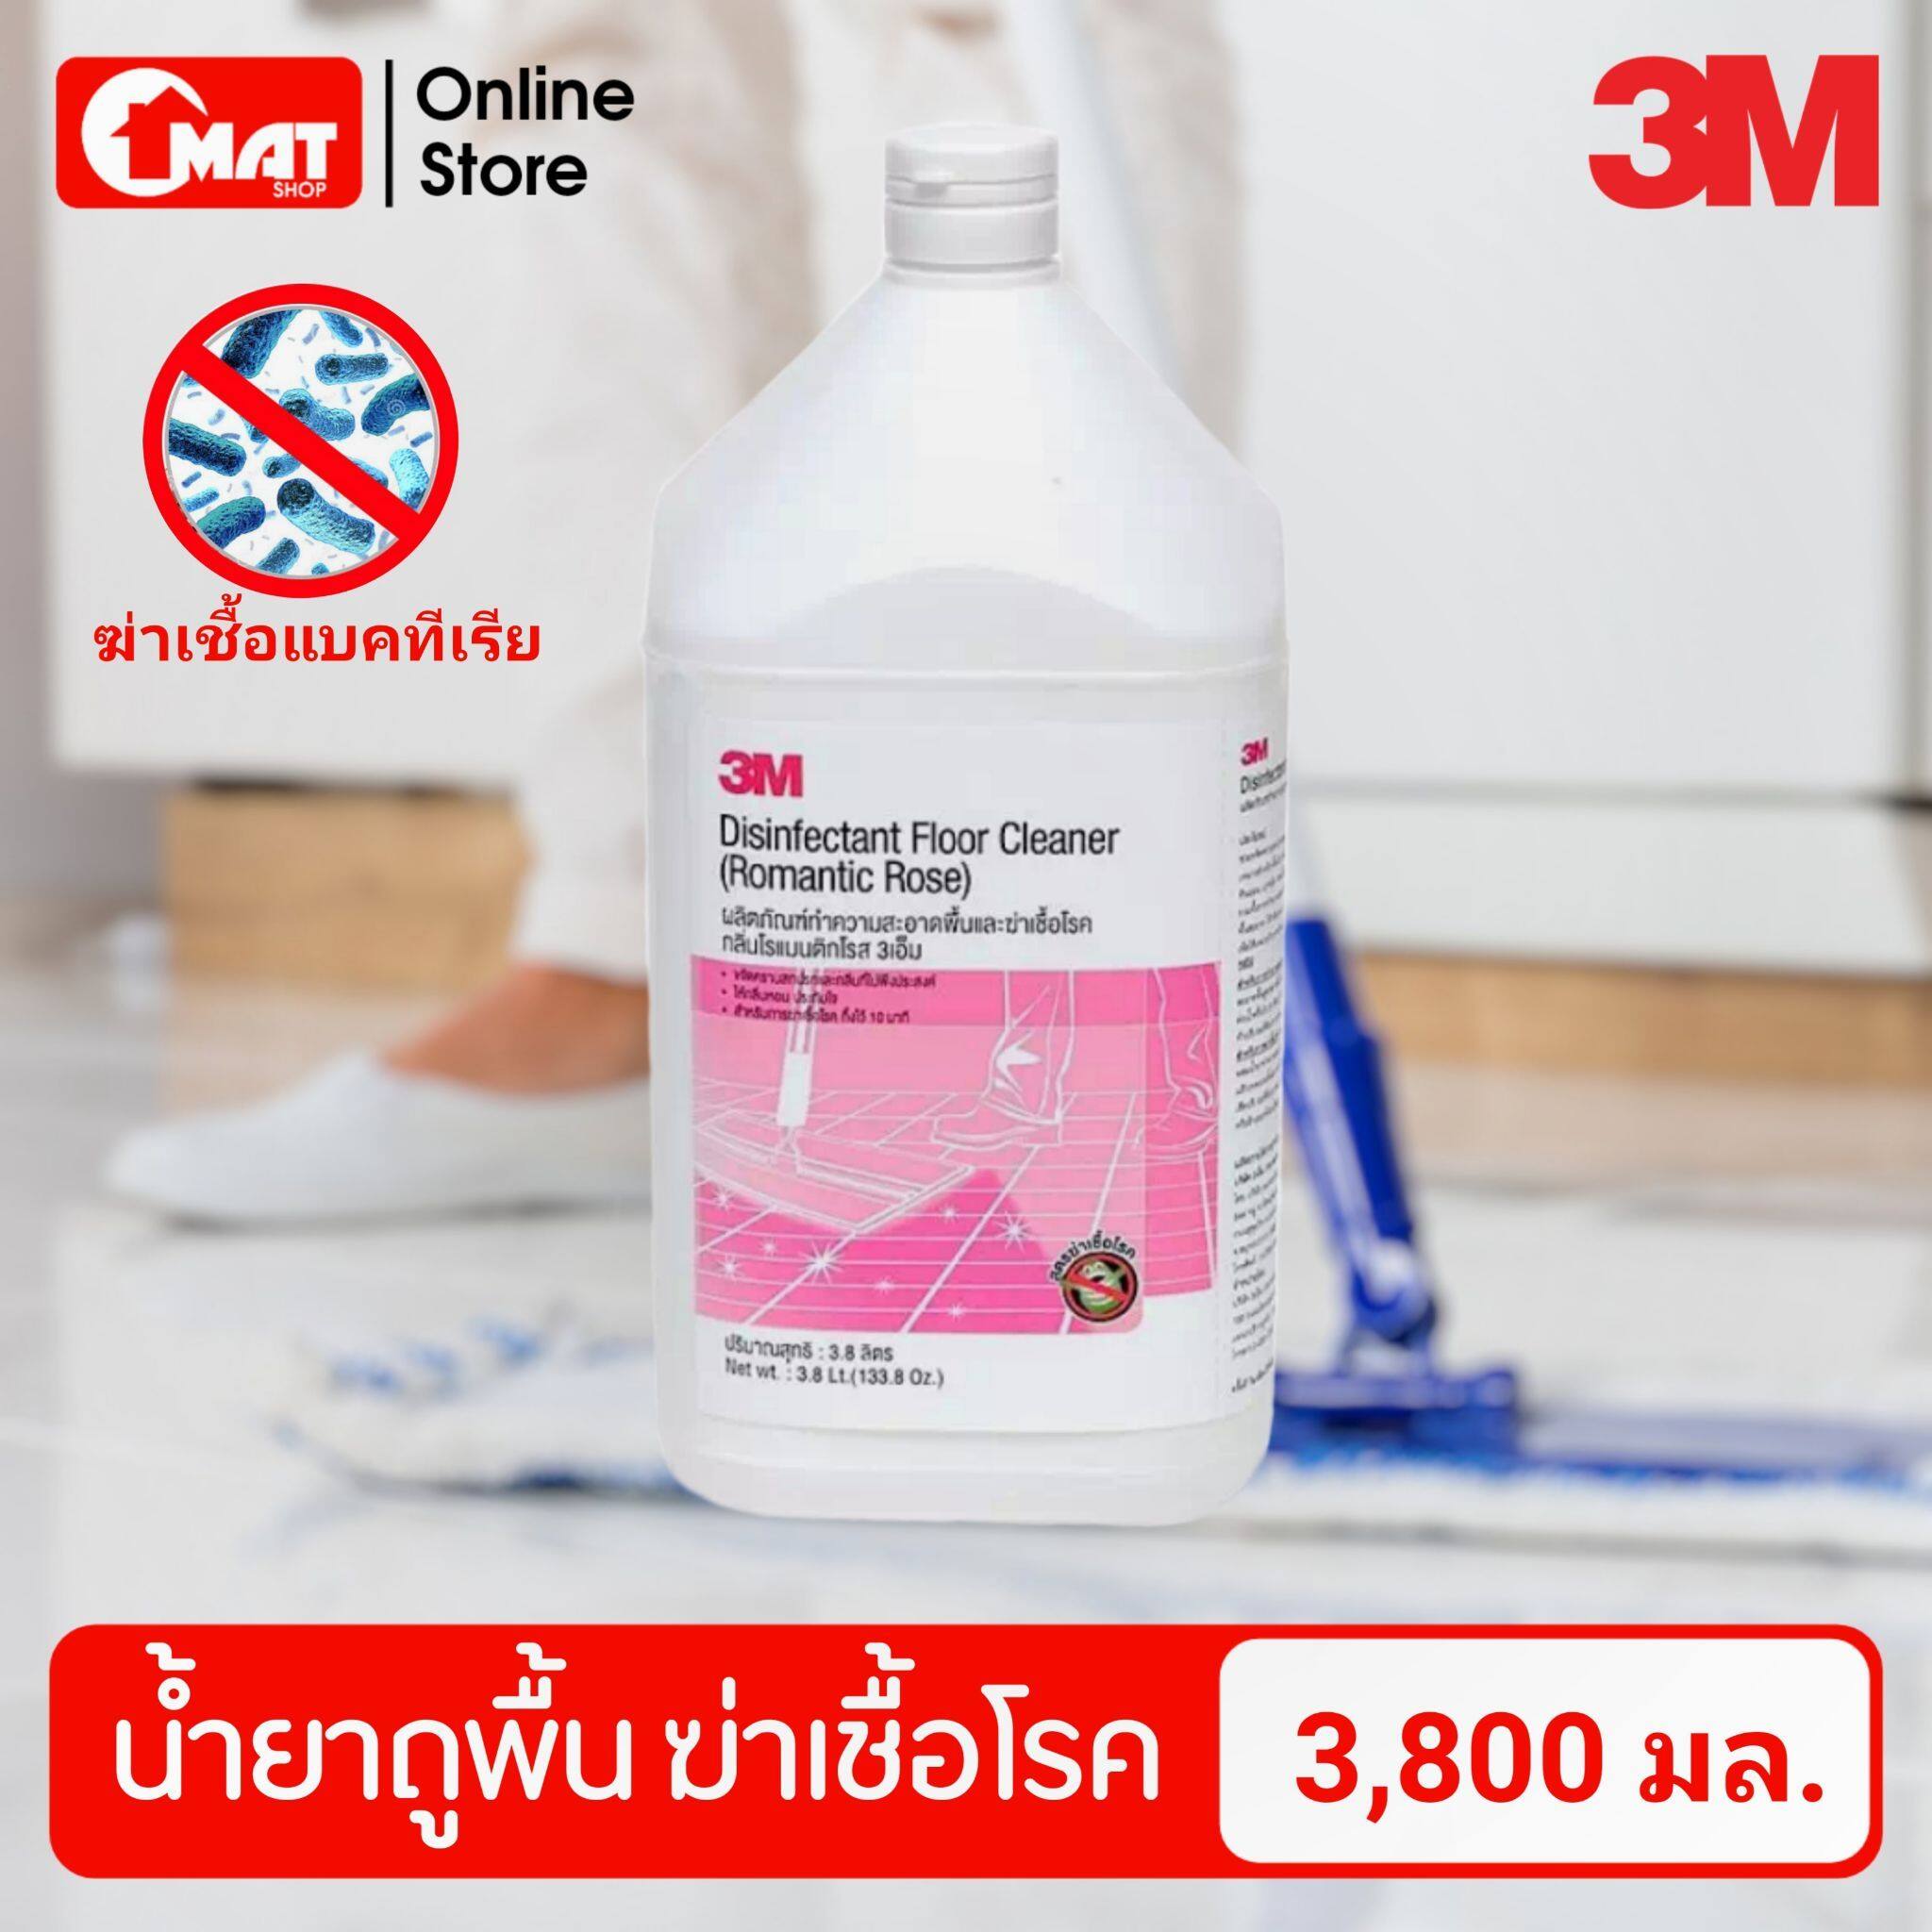 3M ผลิตภัณฑ์ทำความสะอาดพื้นและฆ่าเชื้อแบคทีเรีย ขนาด3.8ลิตร กลิ่นโรแมนติกโรส 3M Disinfectant Floor Cleaner 3.8 L